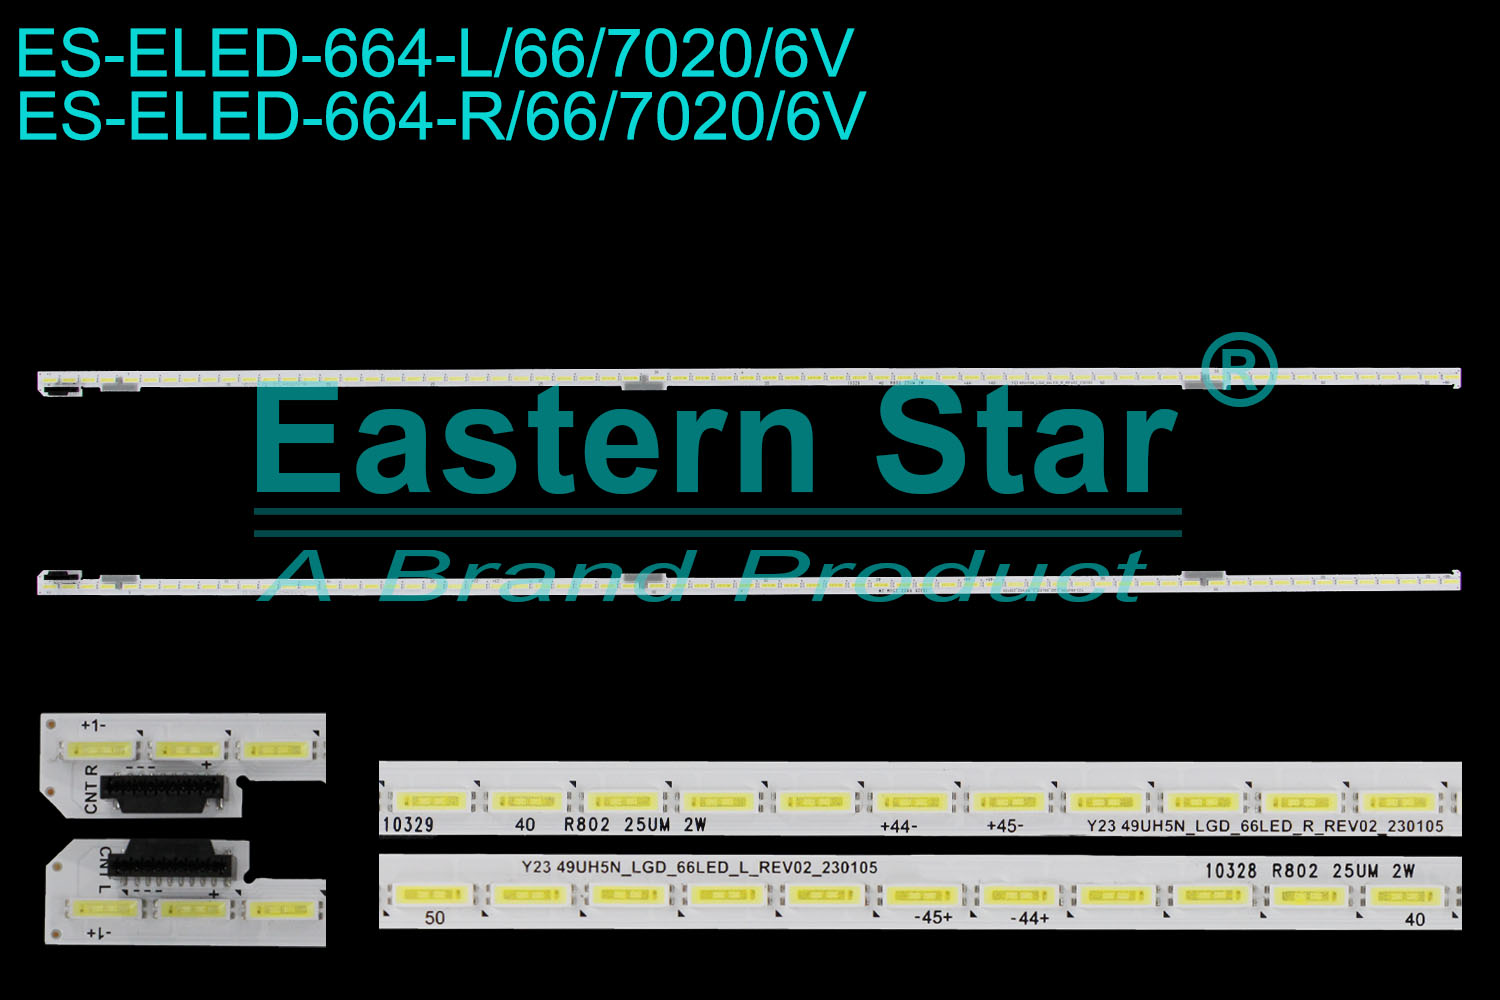 ES-ELED-664 ELED/EDGE TV backlight use for 49'' Lg L: 10328 Y23 49UH5N_LGD_66LED_L_REV02_230105 R802 25UM 2W STL490AC2-L NR0324 C1   R: 10329 Y23 49UH5N_LGD_66LED_R_REV02_230105 R802 25UM 2W STL490AC2-R NR0324 C1 LED STRIPS(/)